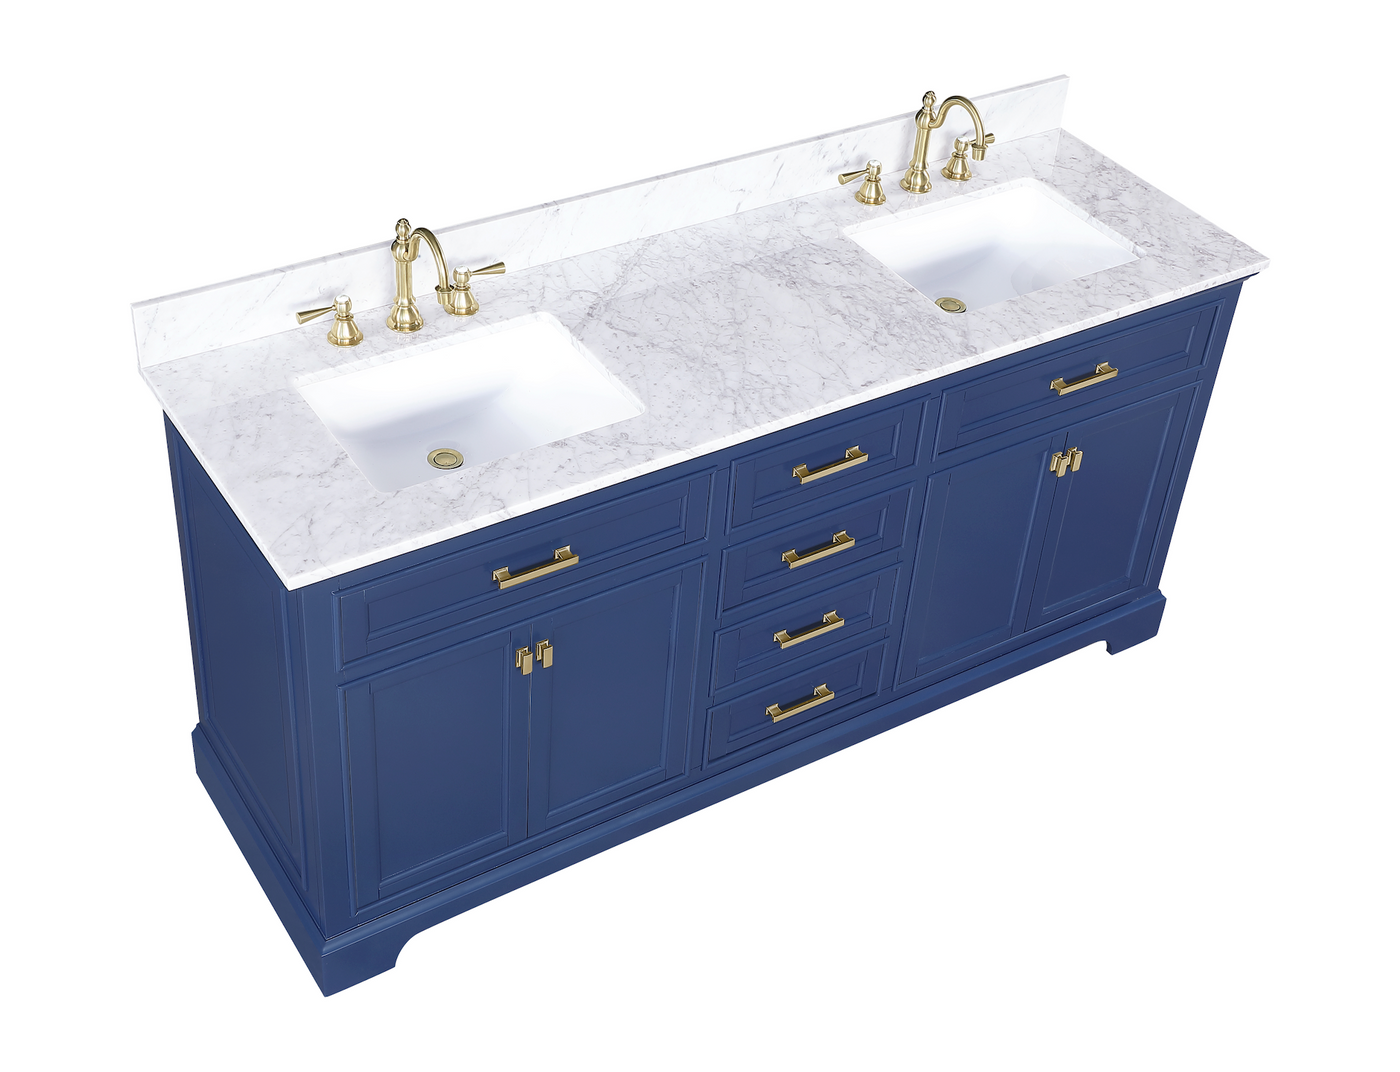 Design Element Milano 72" Double Sink Vanity - Blue ML-72-BLU